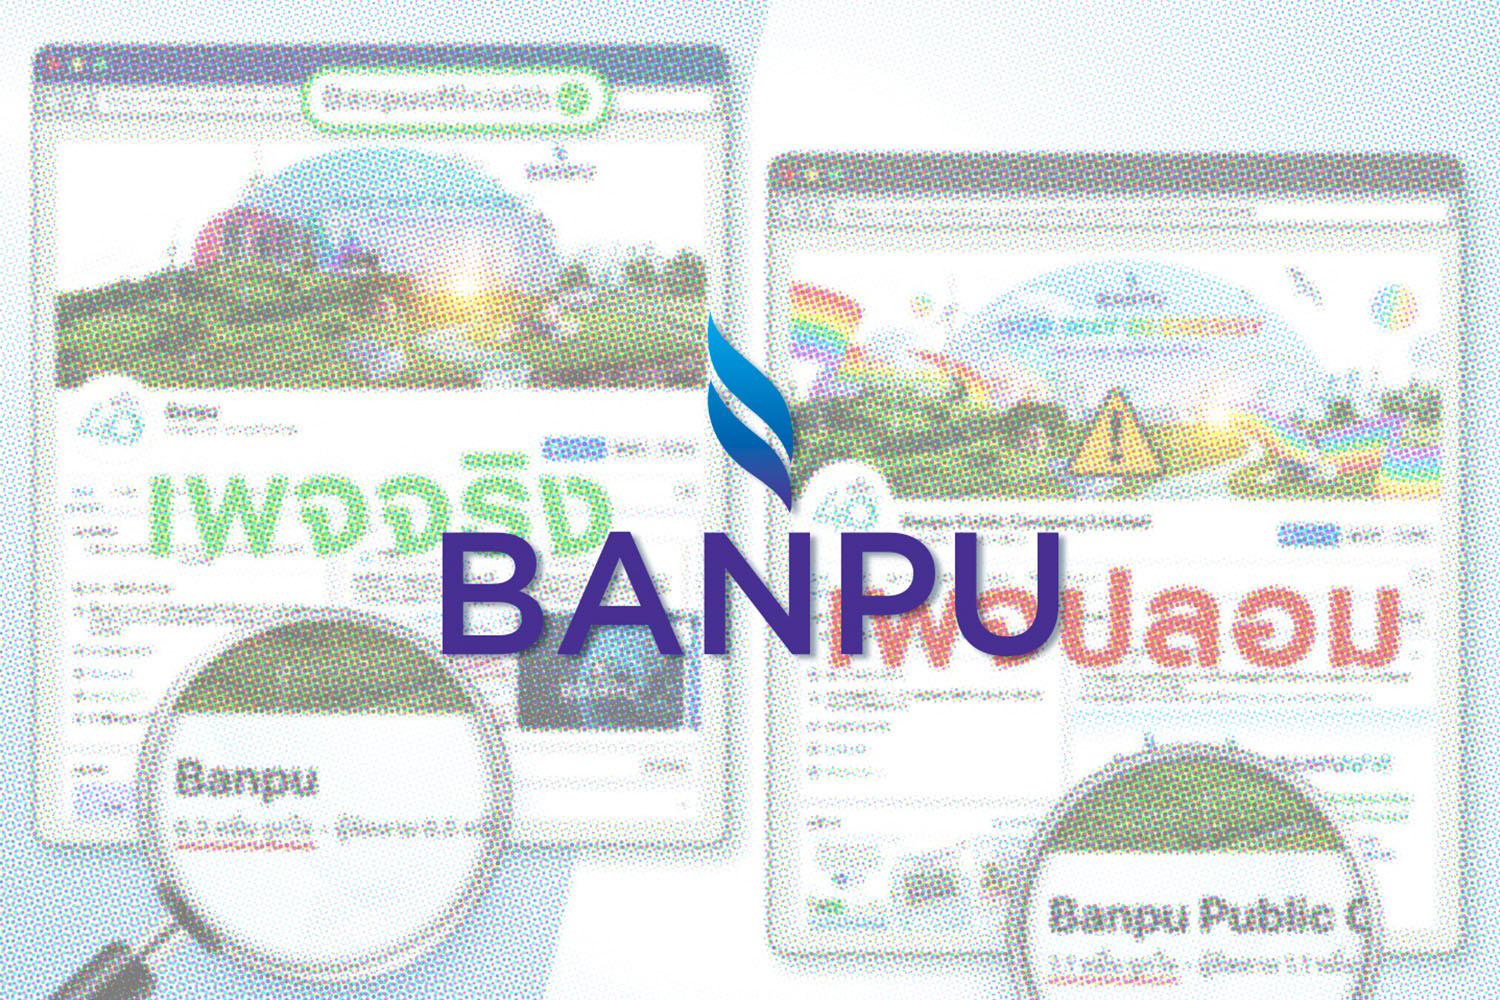 Banpu-warns-fraudulent-scams-via-social-Media-investment-SPACEBAR-Hero